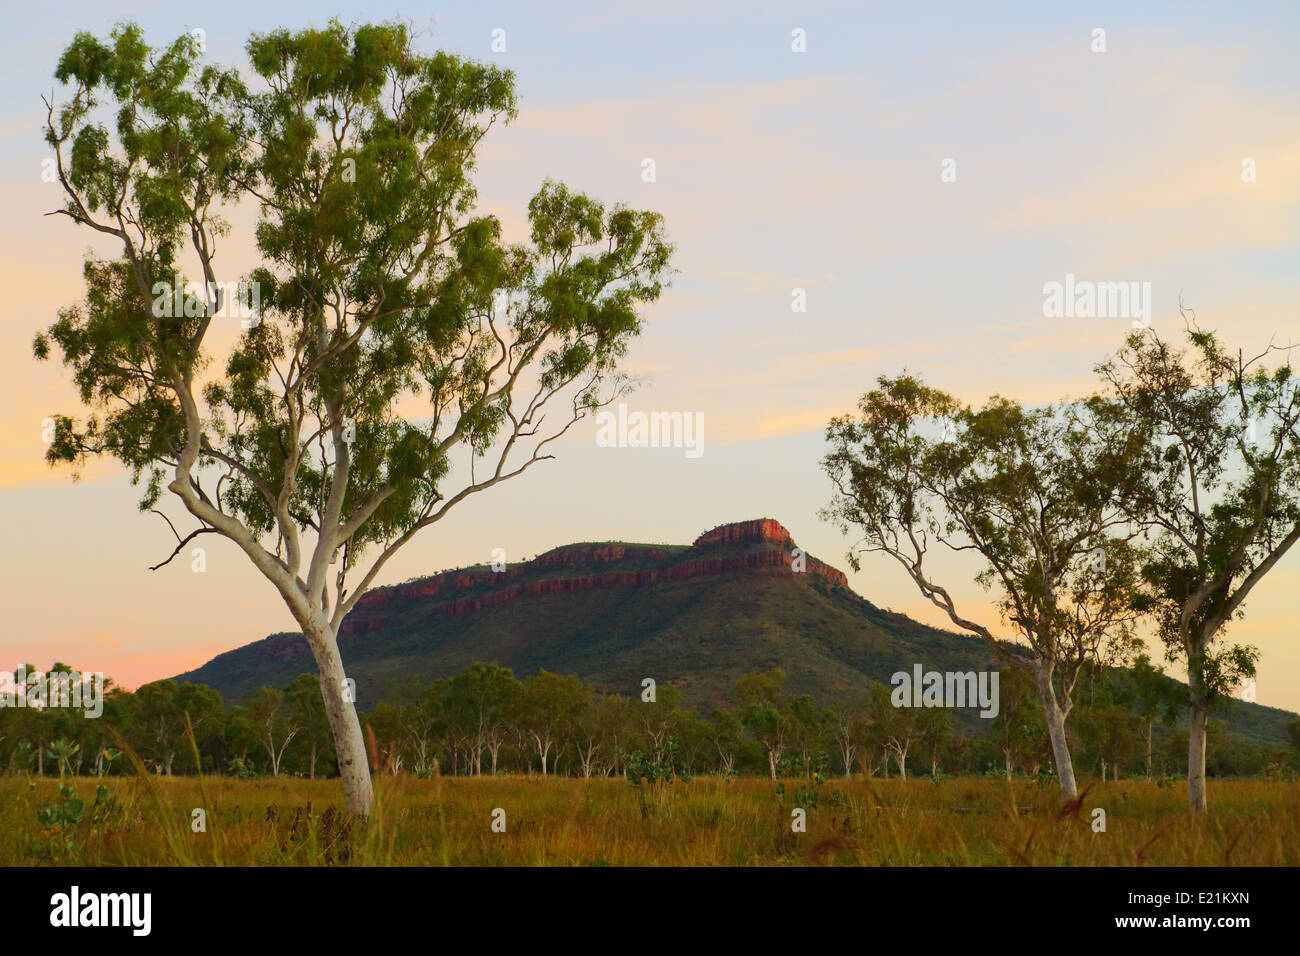 A regular Kimberley scene, seen at dusk - eucalyptus trees and geologic outcrop, near Kununurra, Western Australia Stock Photo